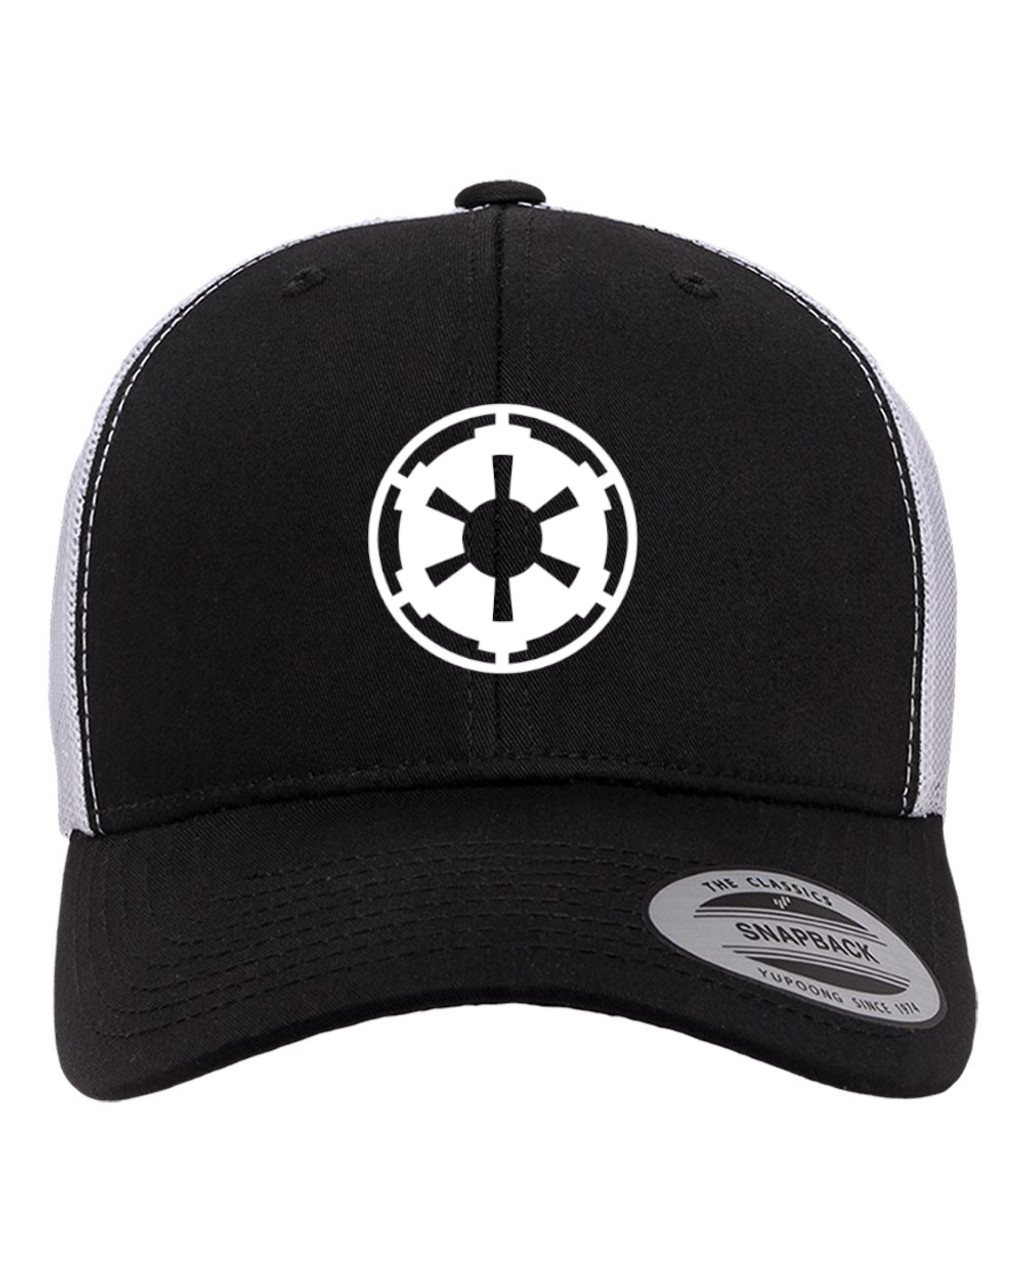 Star Force Rebel Alliance Black Emblem Heat Pressed Hat - Adult White Twill Adjustable Cap